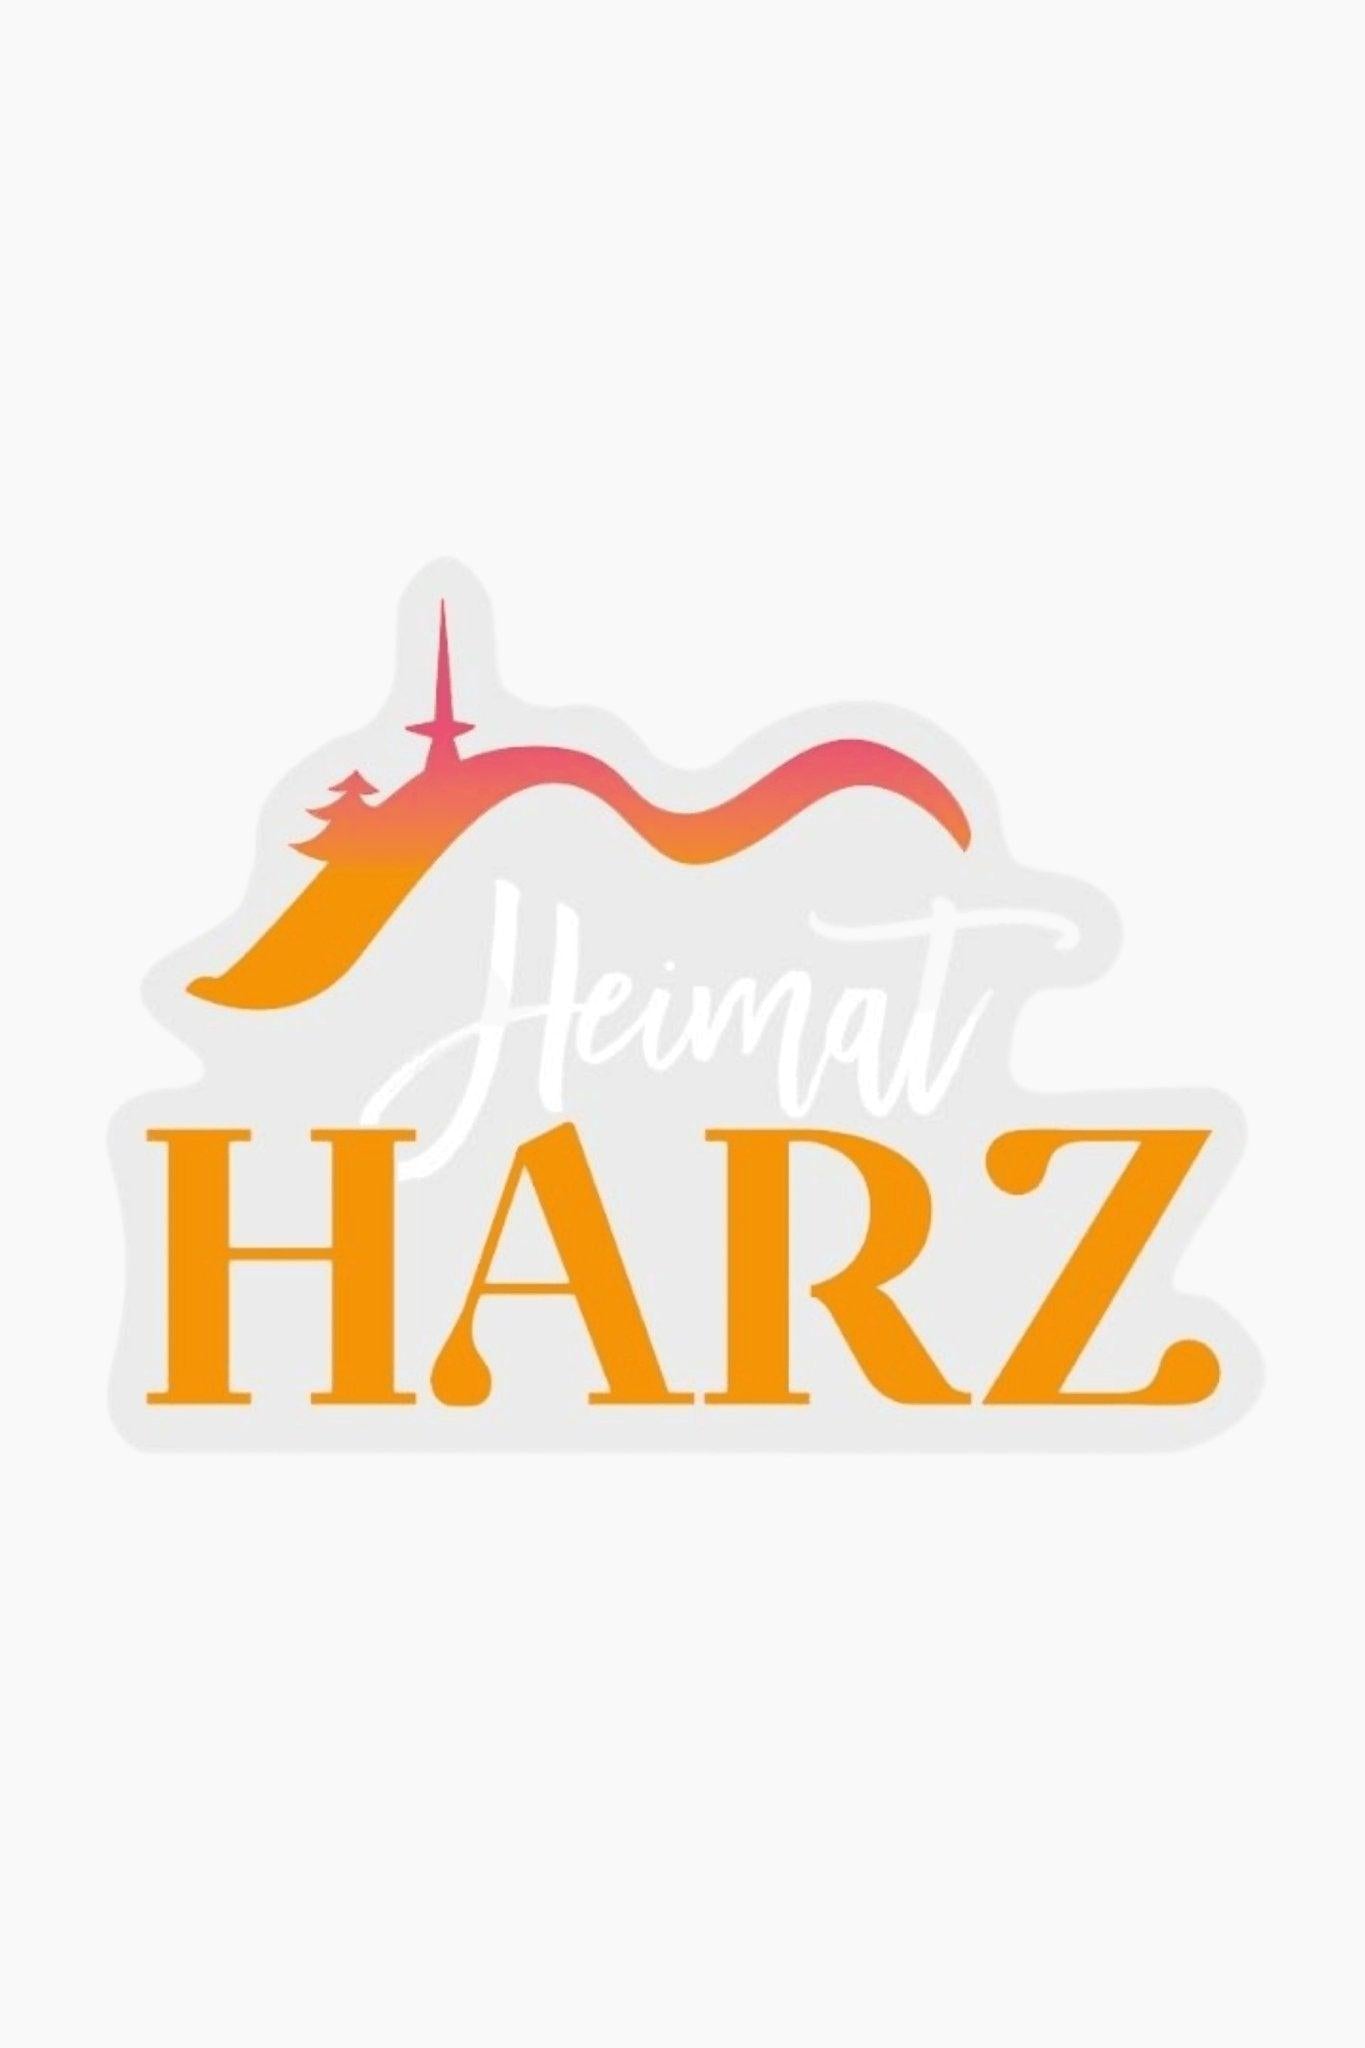 Autoaufkleber Heimat Harz - Heimat Harz Shop